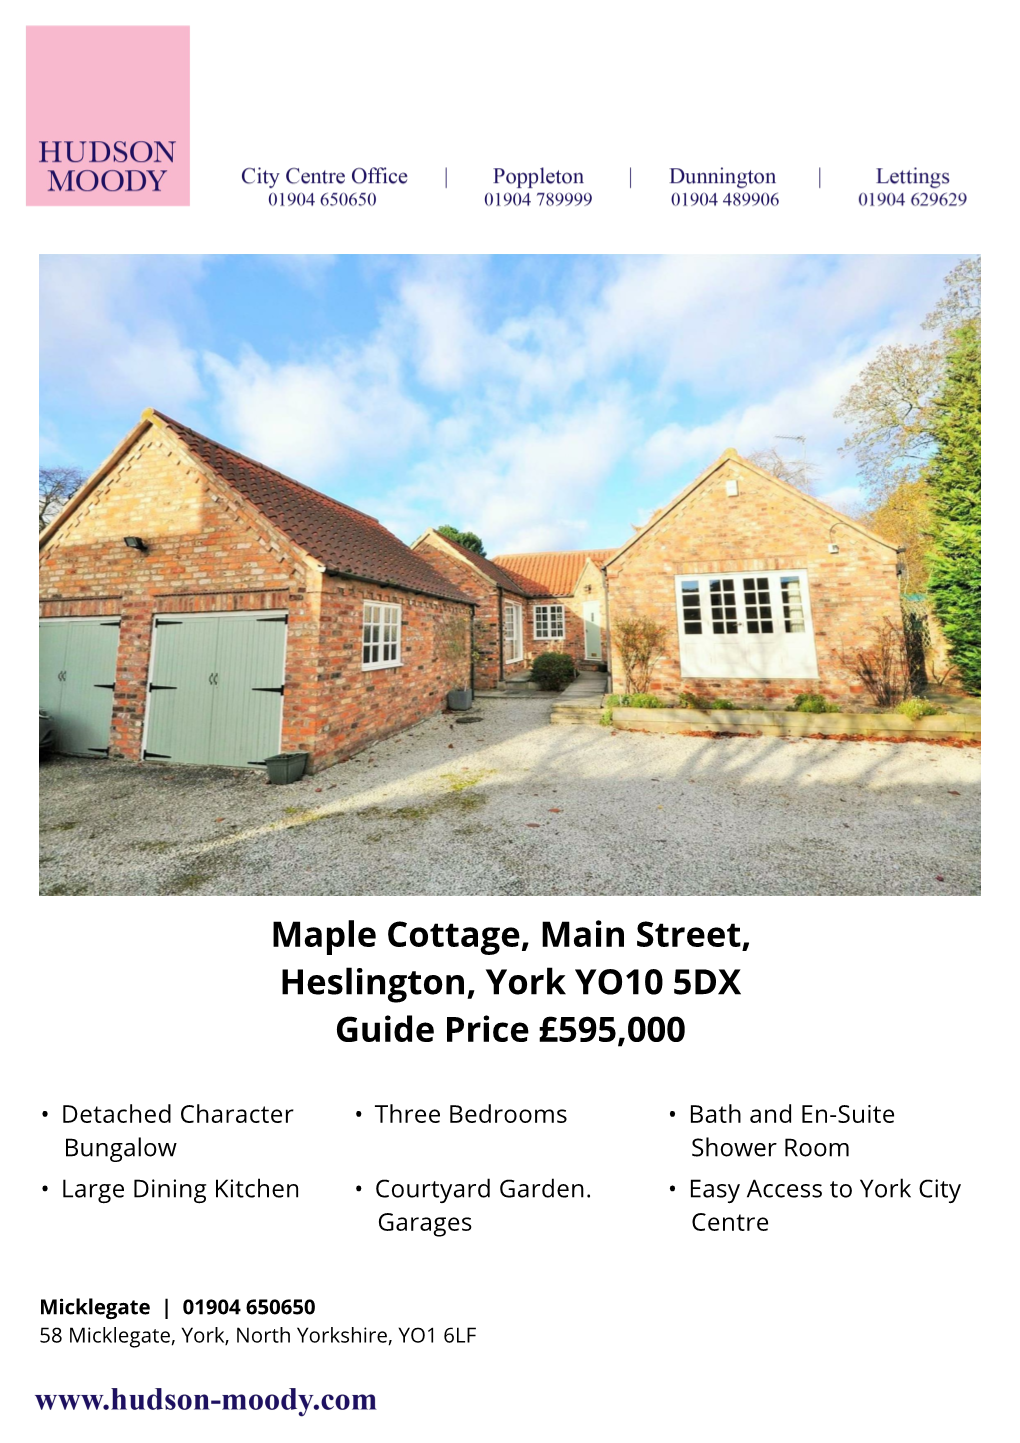 Maple Cottage, Main Street, Heslington, York YO10 5DX Guide Price £595,000